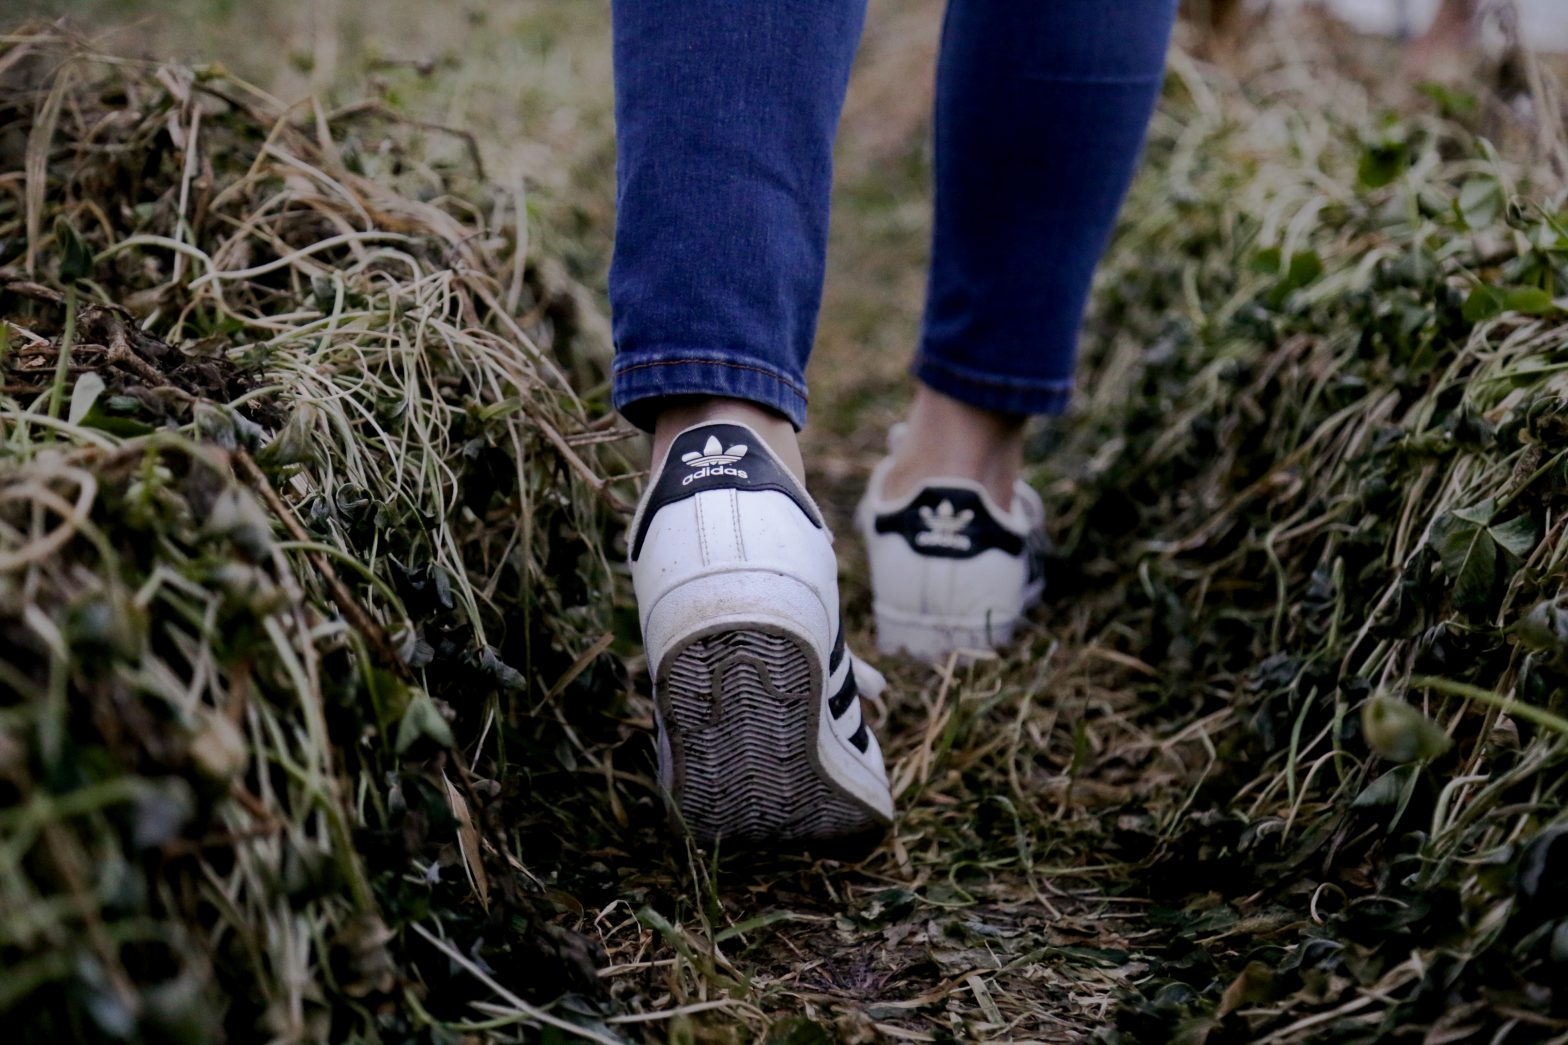 A close-up of a woman's feet as she walks away through a grassy path.